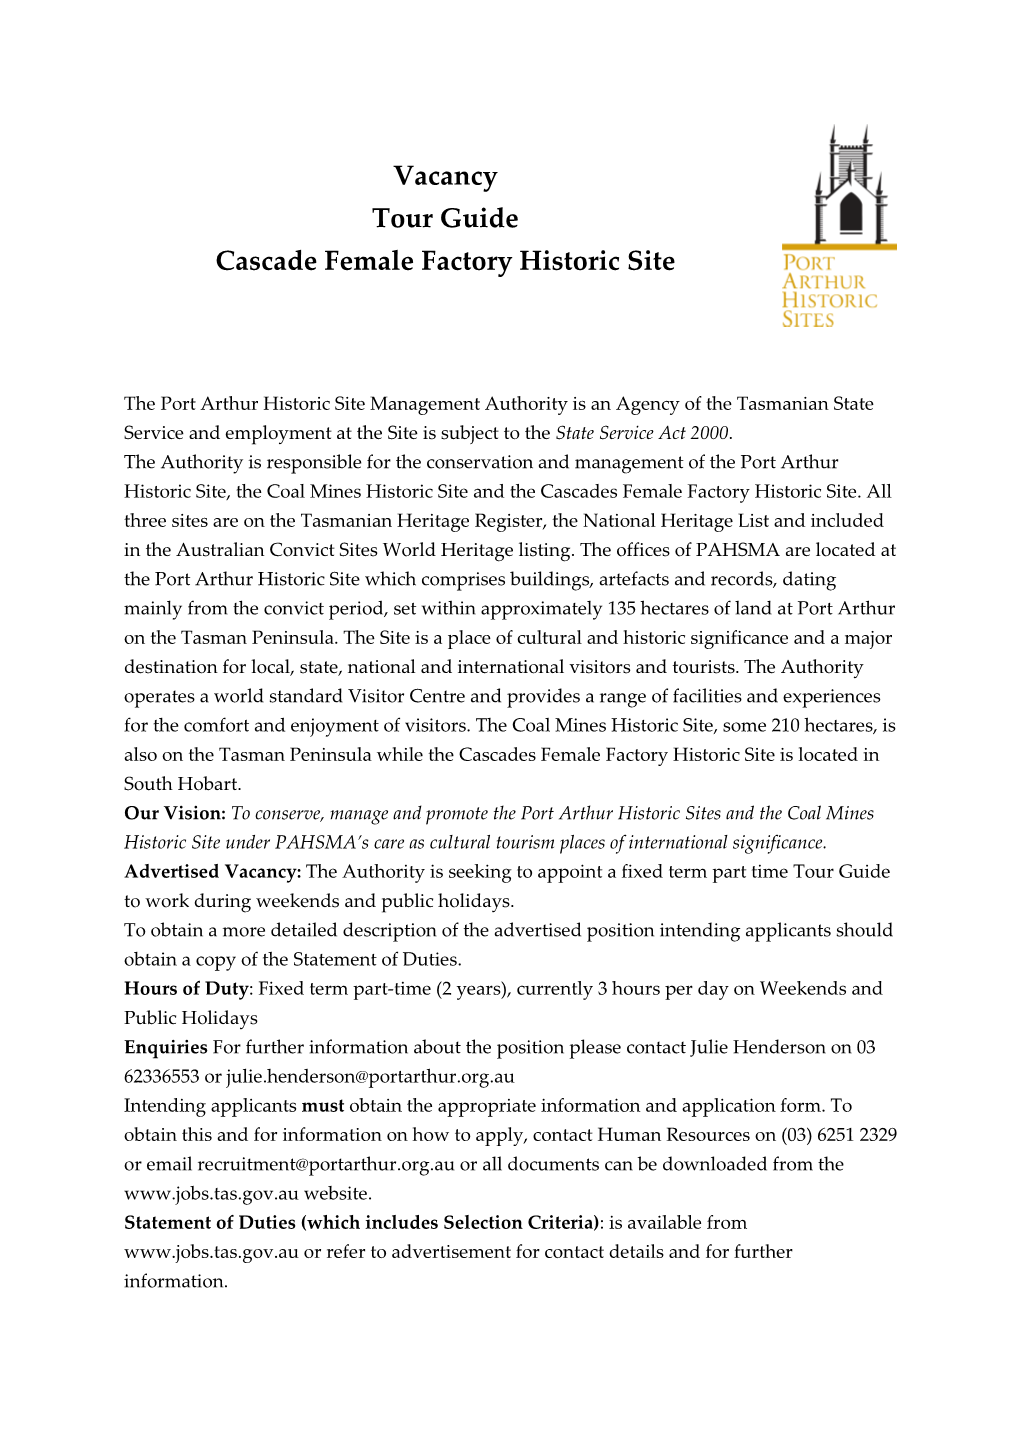 Vacancy Tour Guide Cascade Female Factory Historic Site